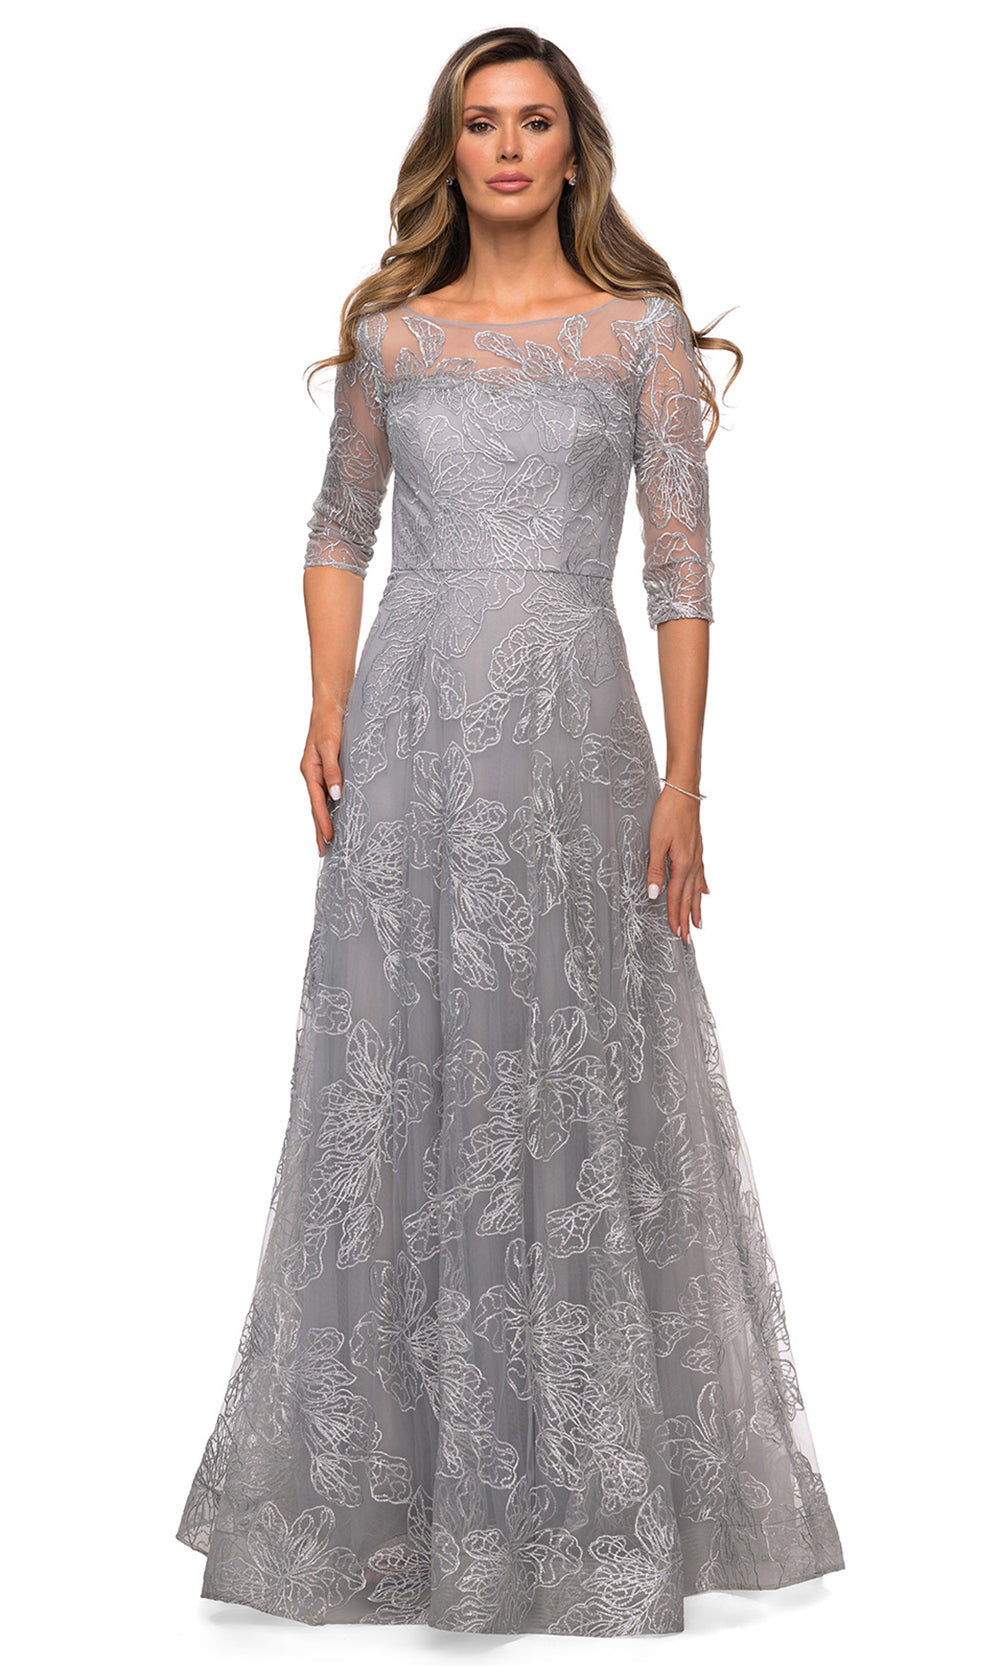 La Femme - 27942 Illusion Floral Lace A-Line Dress In Silver & Gray